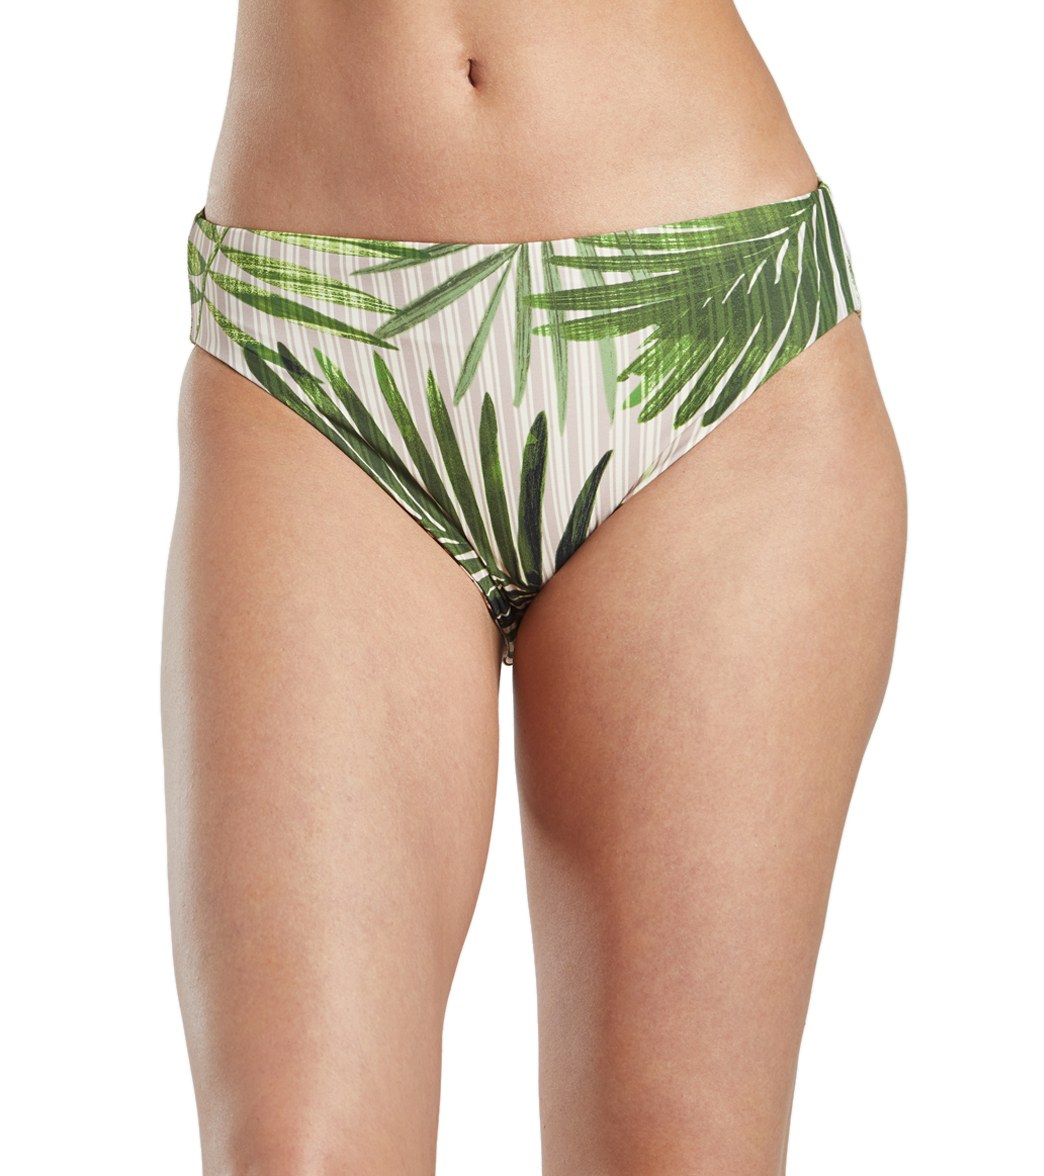 Vince Camuto Tropical Palm Reversible High Leg Bikini Bottom - Fern Small - Swimoutlet.com